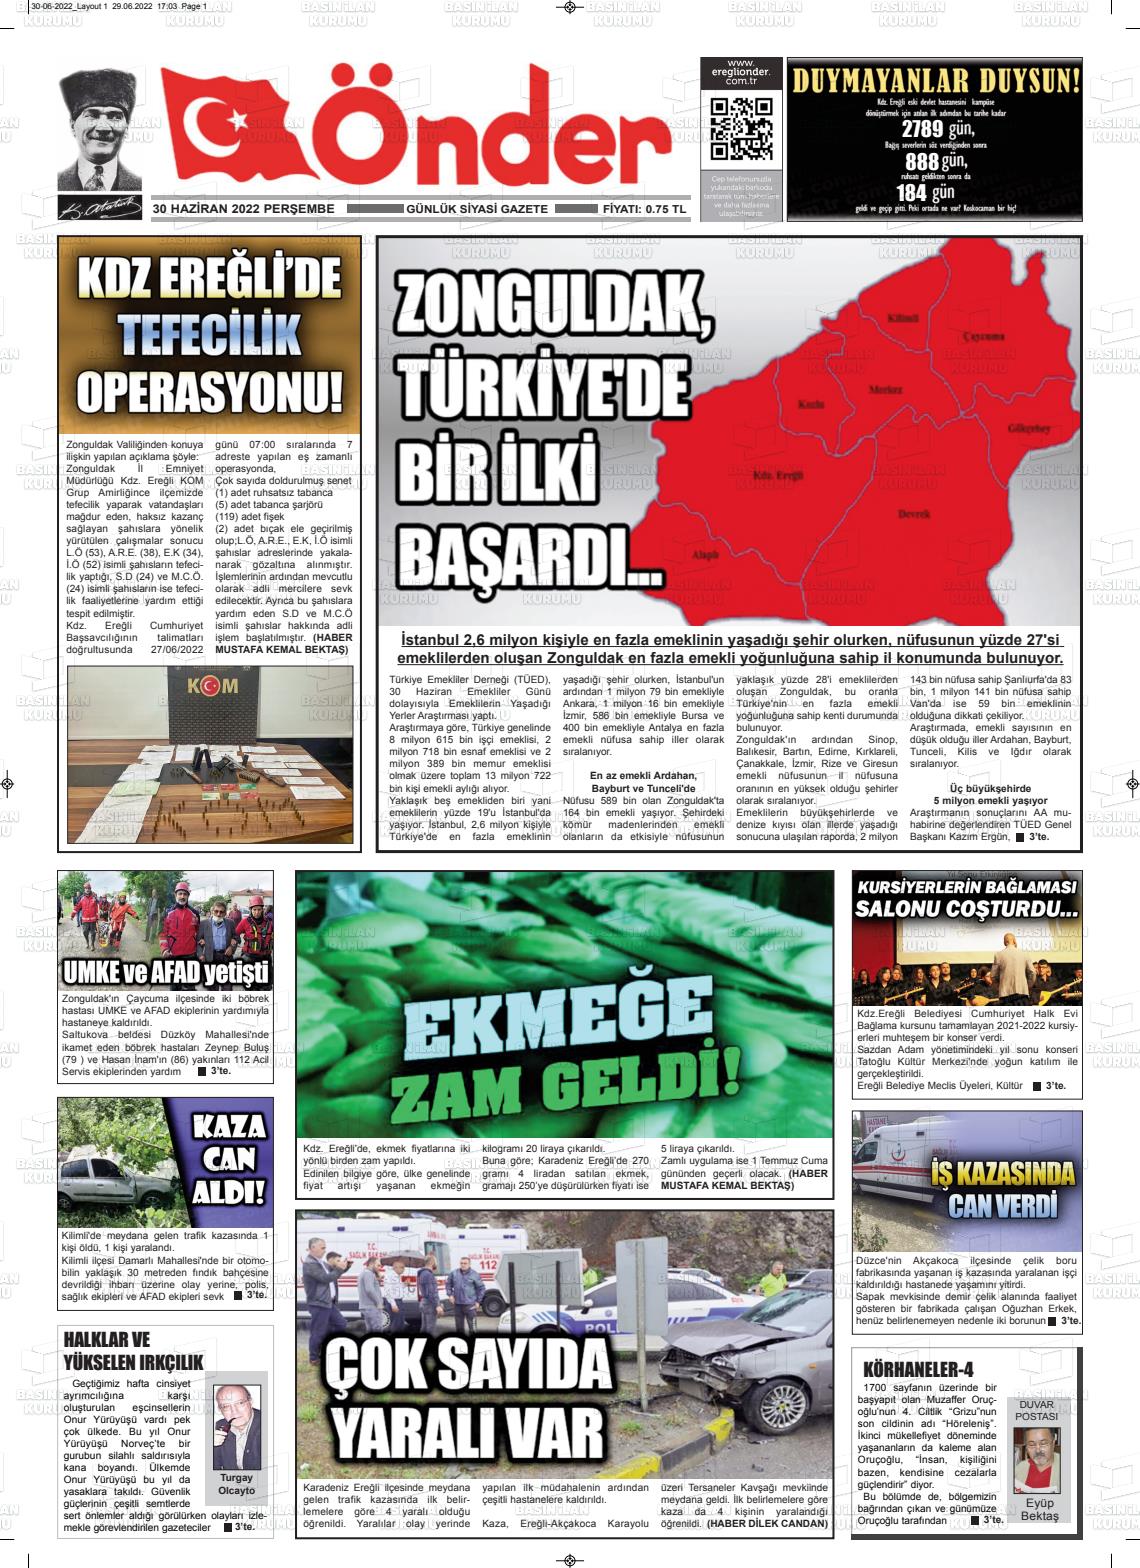 30 Haziran 2022 Zonguldak Önder Gazete Manşeti